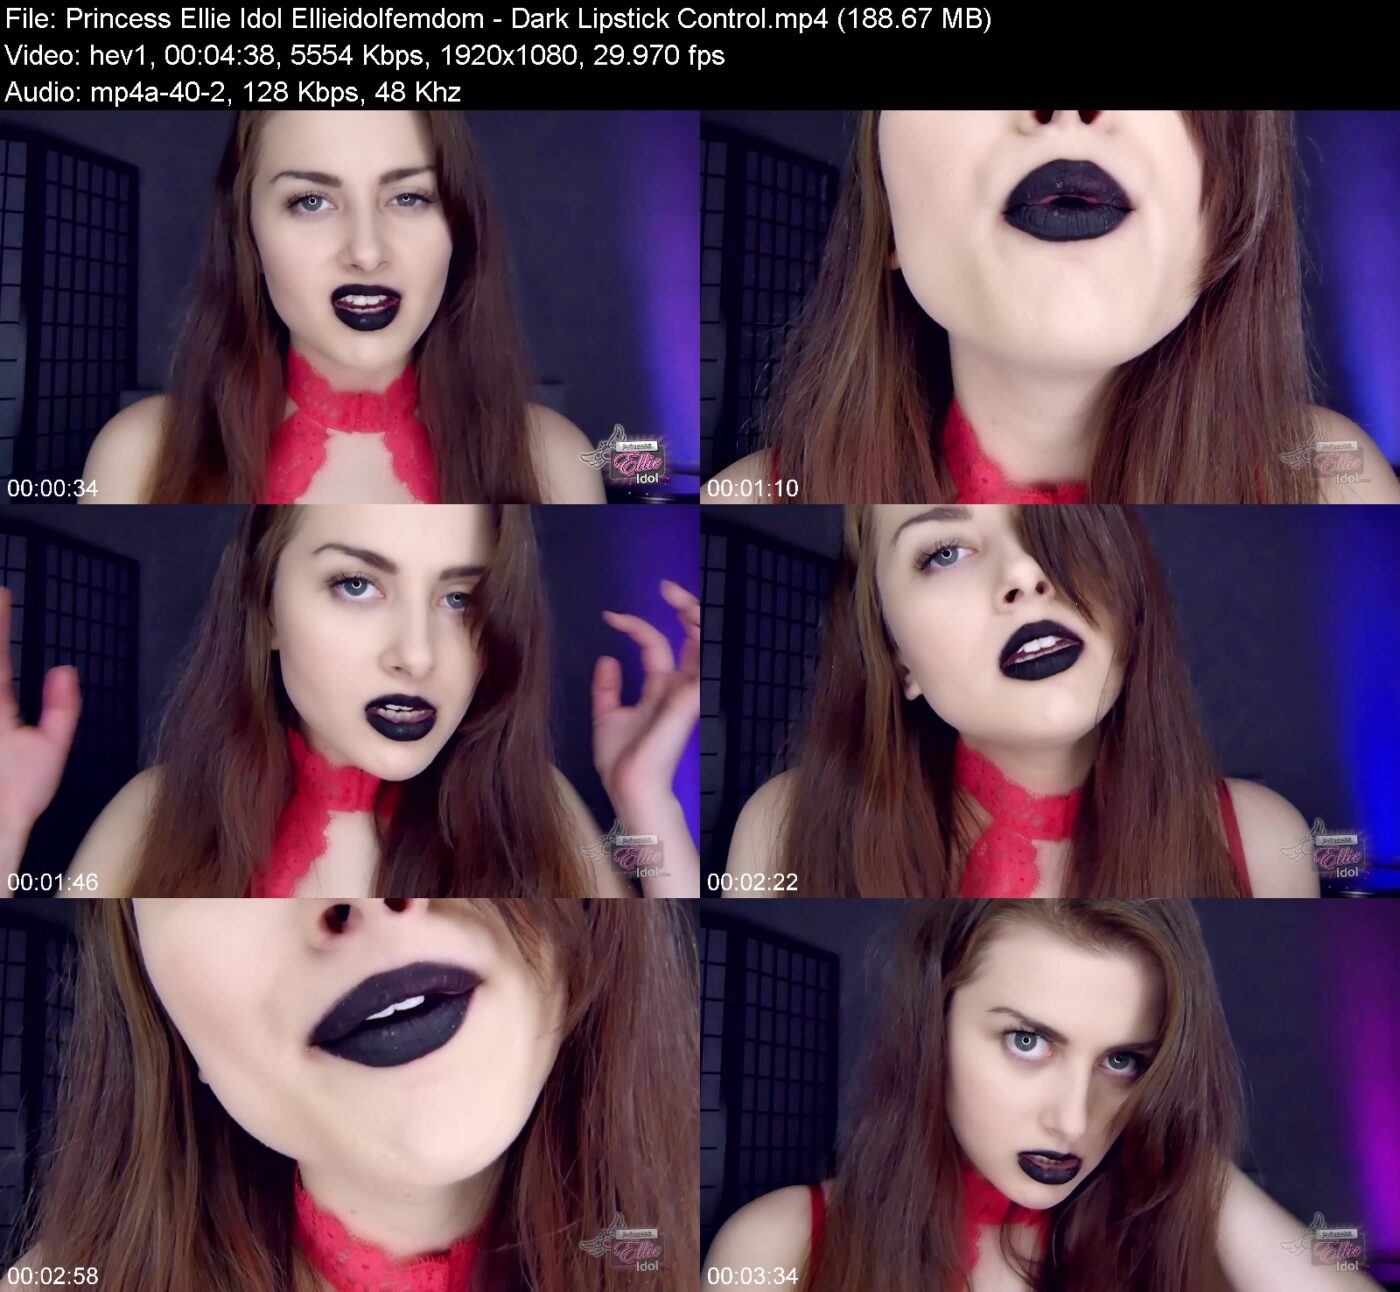 Princess Ellie Idol Ellieidolfemdom - Dark Lipstick Control